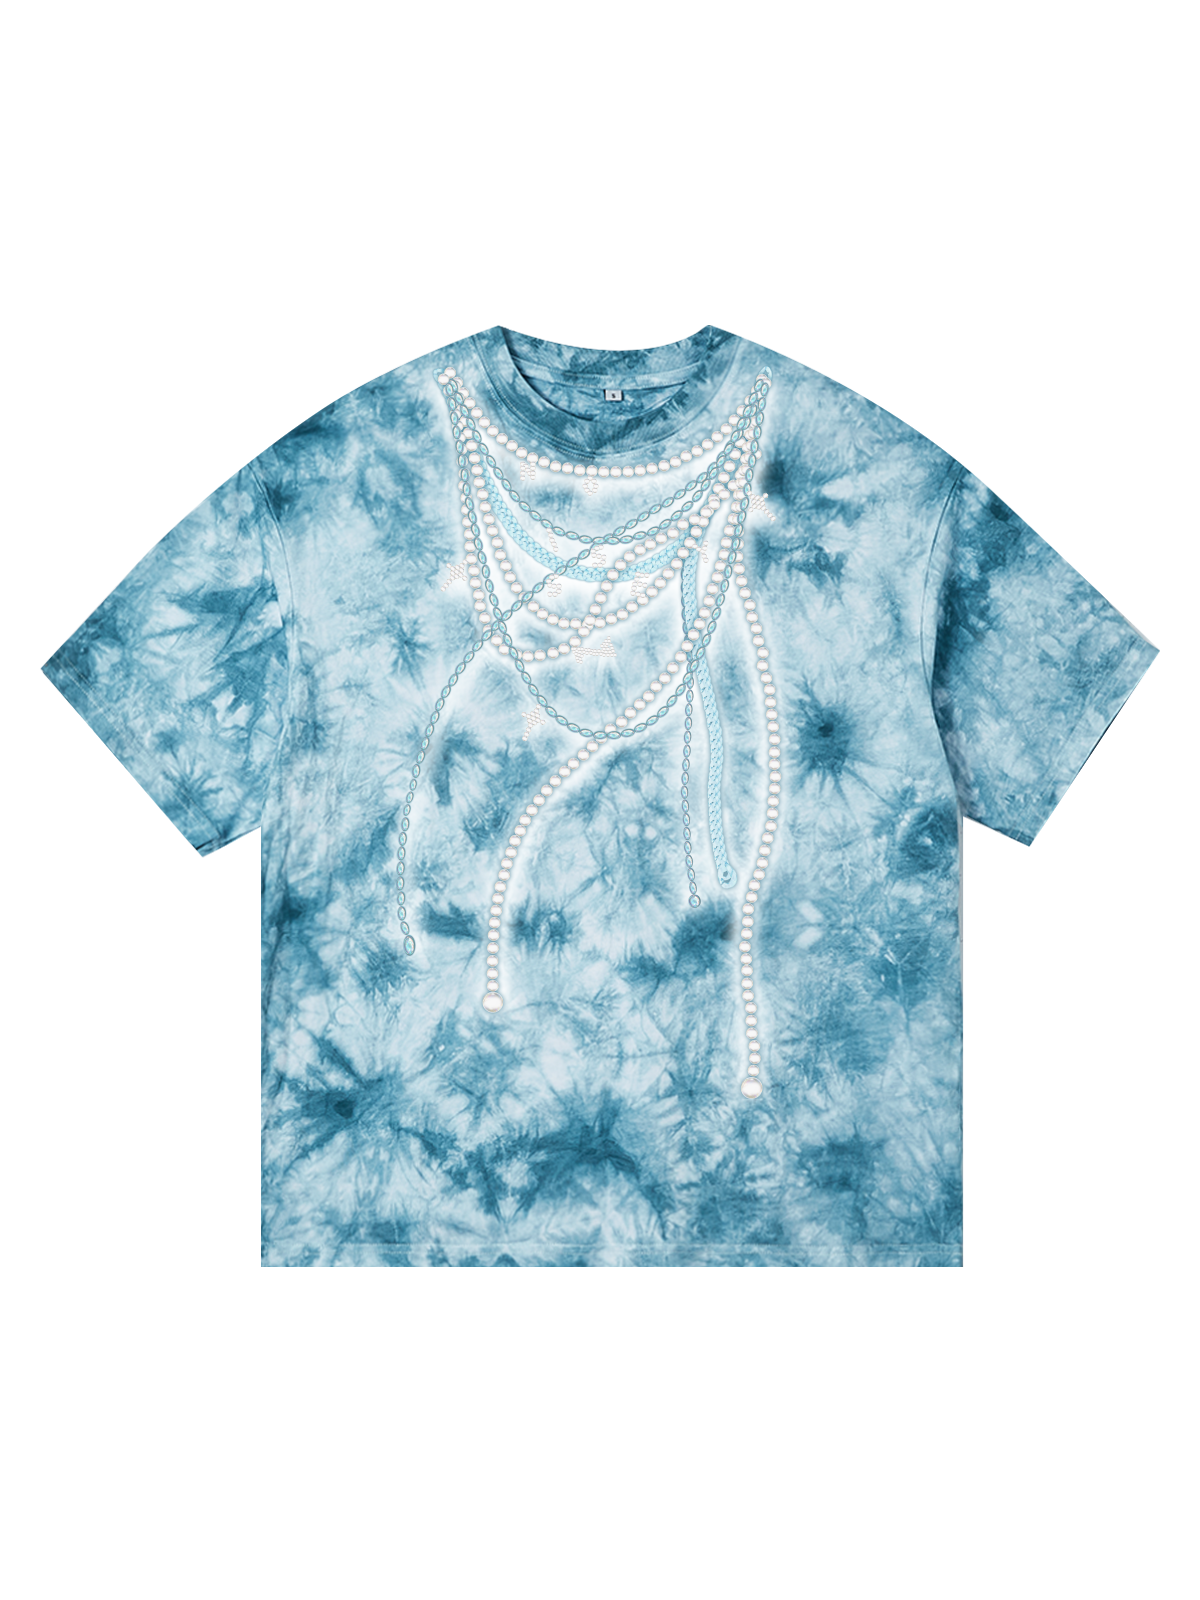 BOUNCE BACK© High Weight Tie-Dye Pearl Sky Blue Print T-shirt